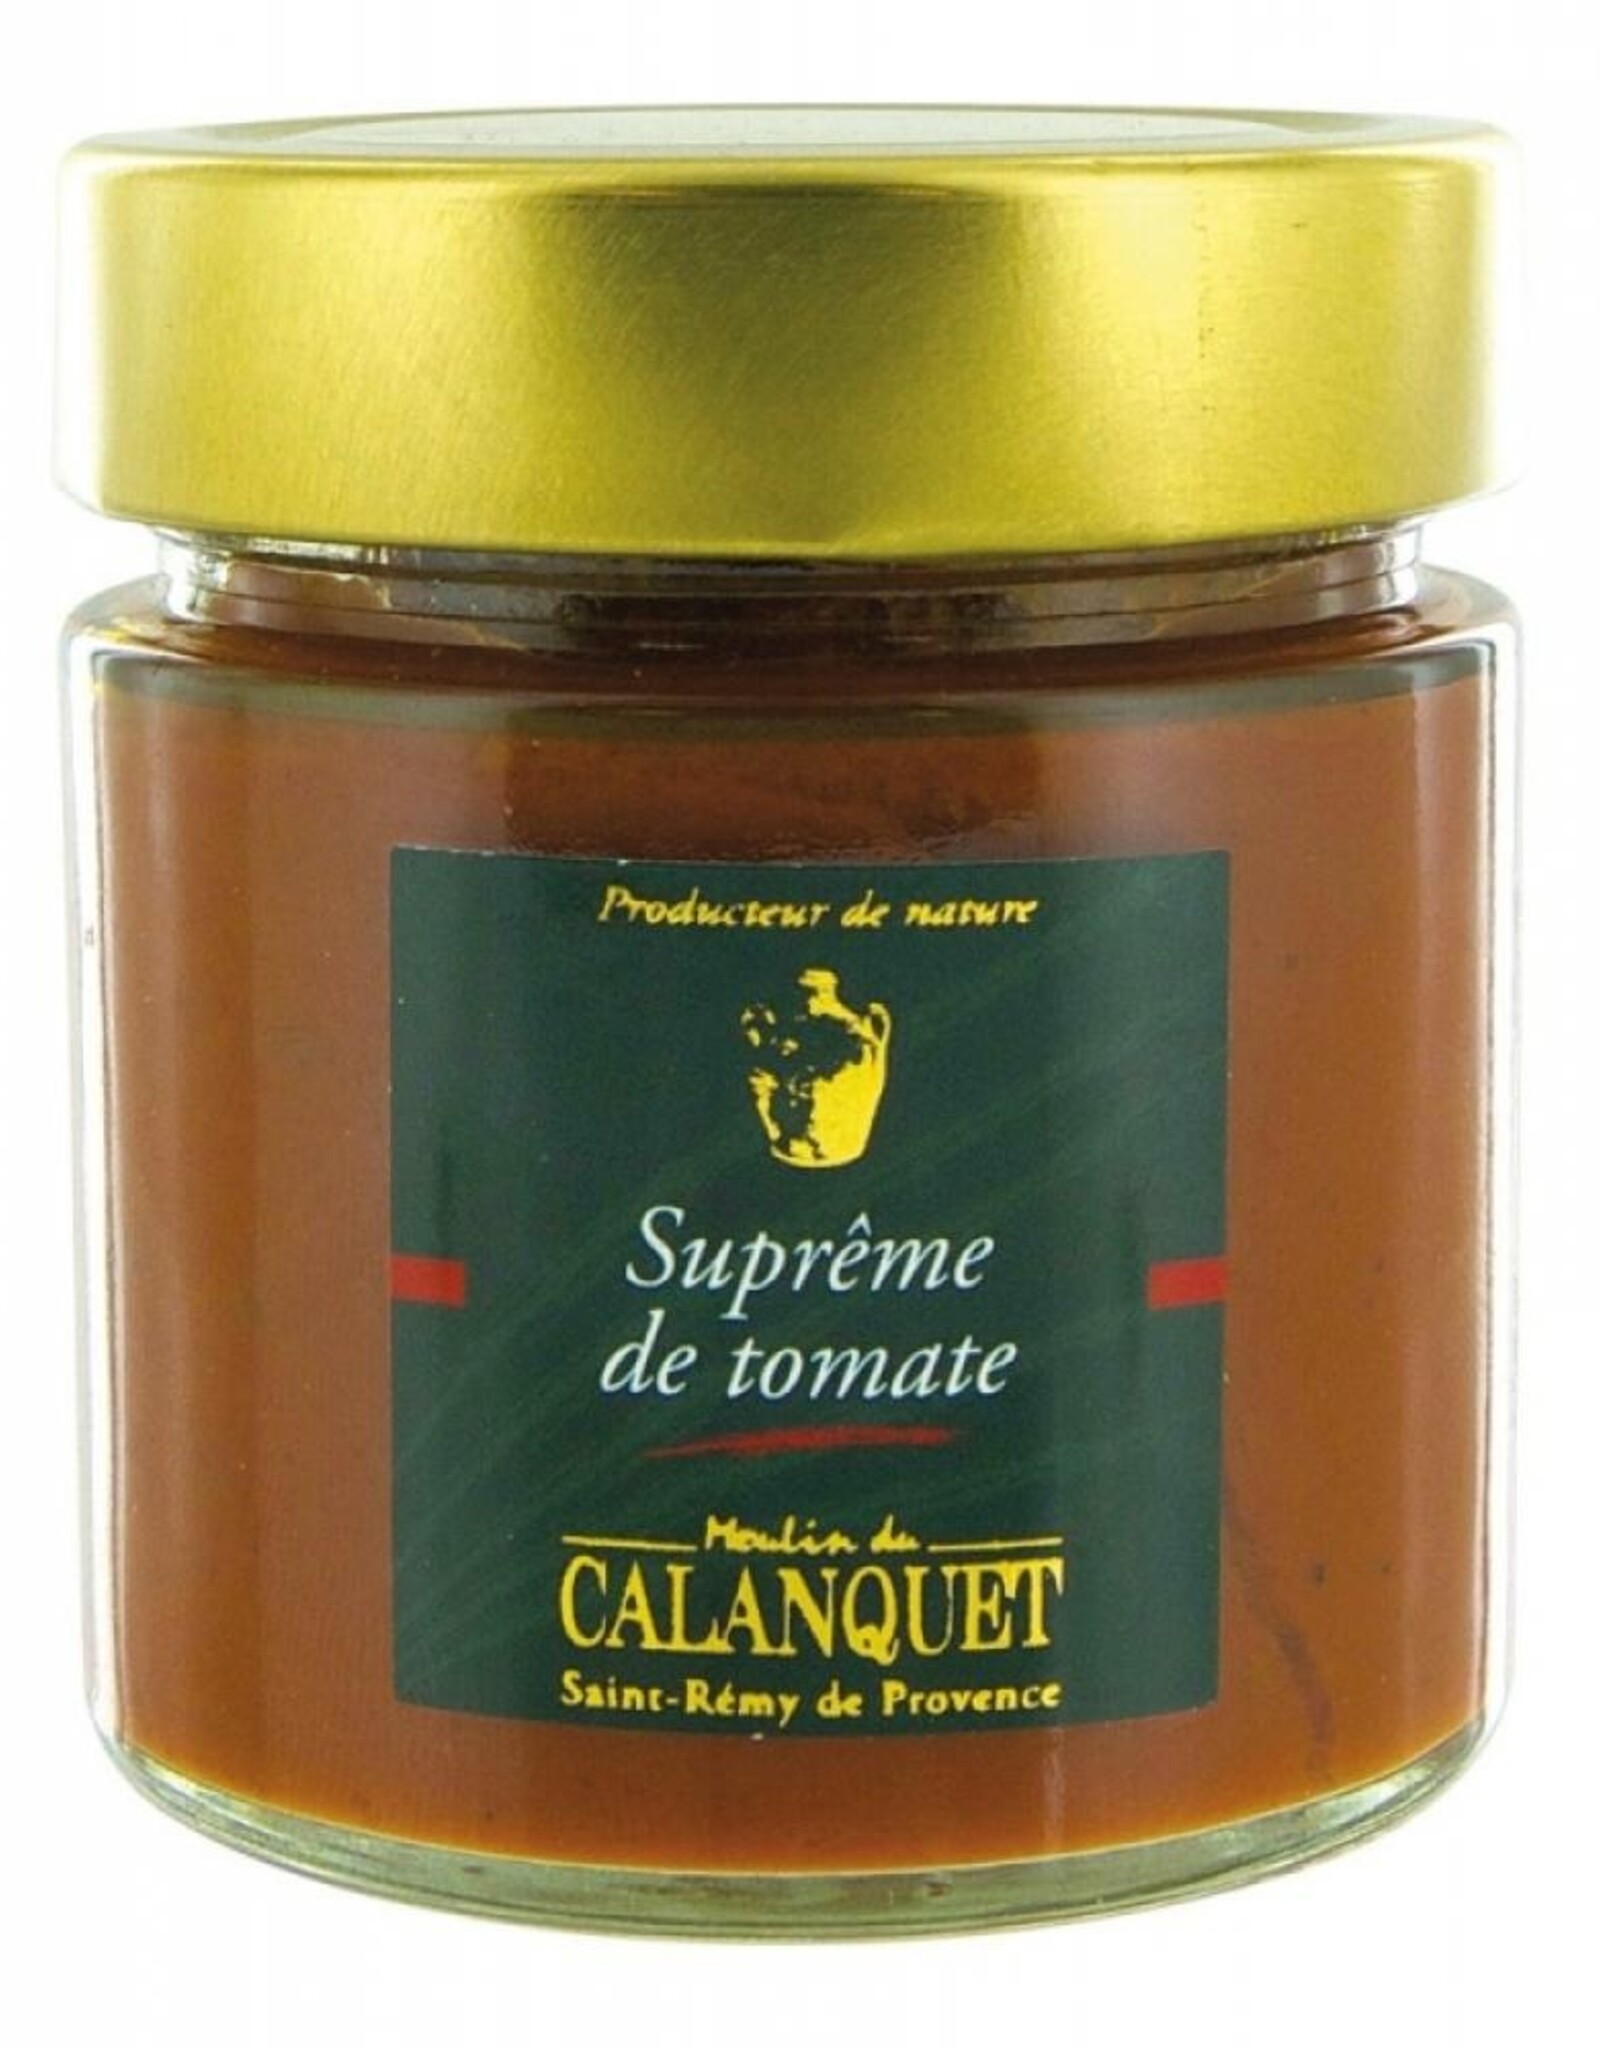 Moulin du Calanquet Suprême de Tomate  / Tomato Caviar 35g